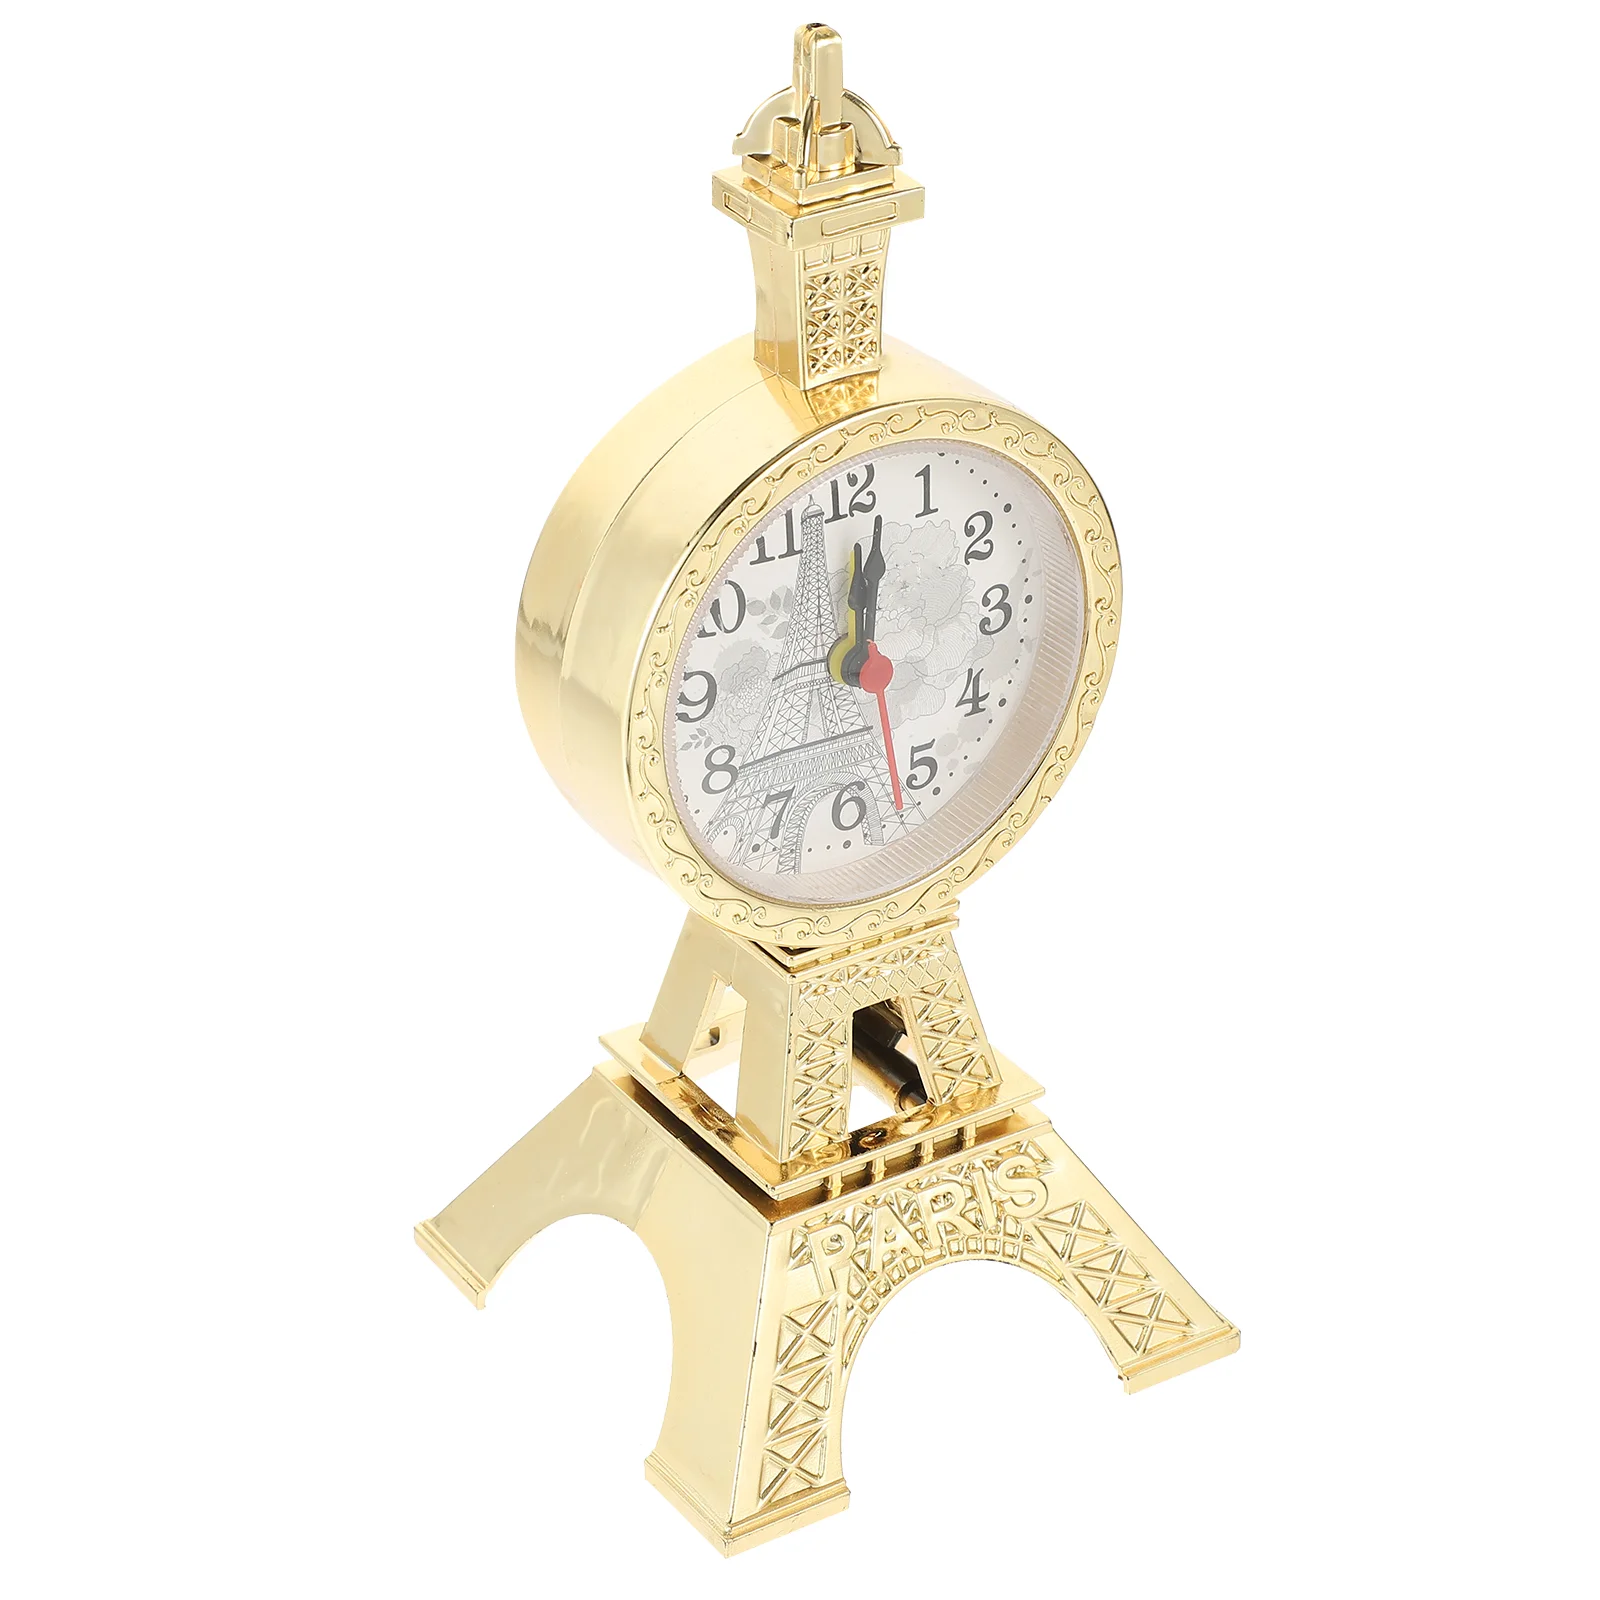 

Vintage Alarm Clock Eiffel Tower Statue Battery Operated France Landmark Collectible Figurine Paris Souvenir Gift